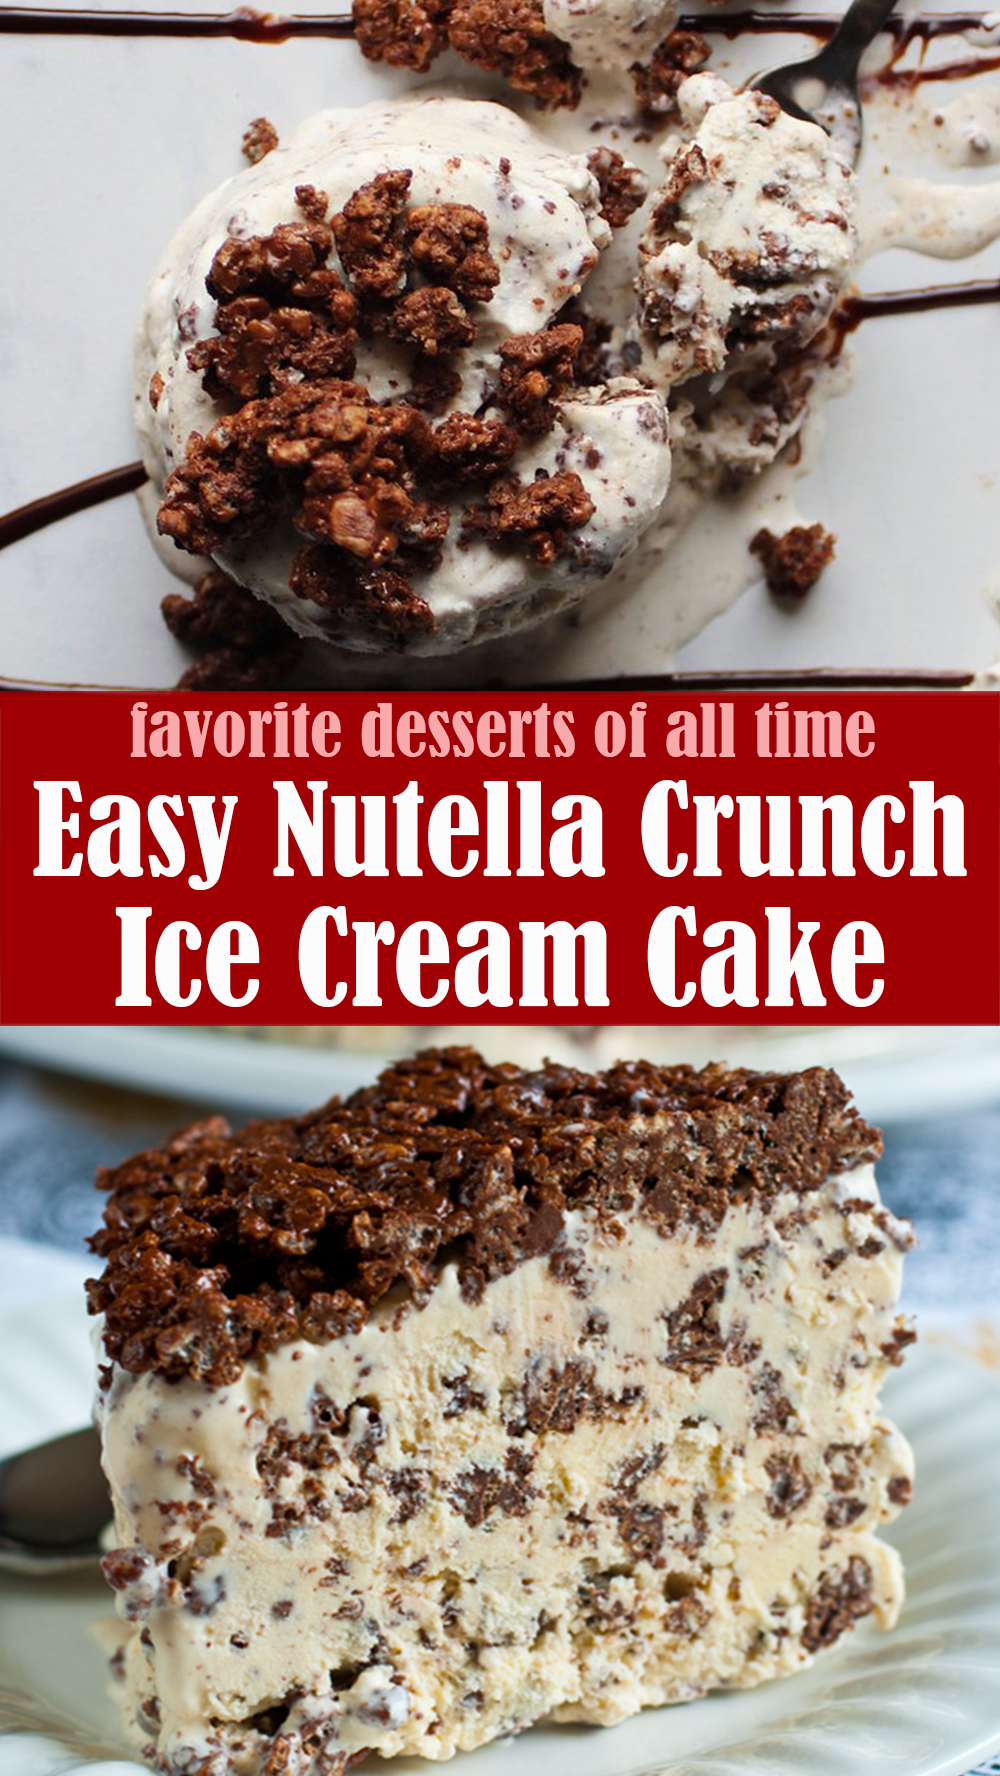 Easy Nutella Crunch Ice Cream Cake